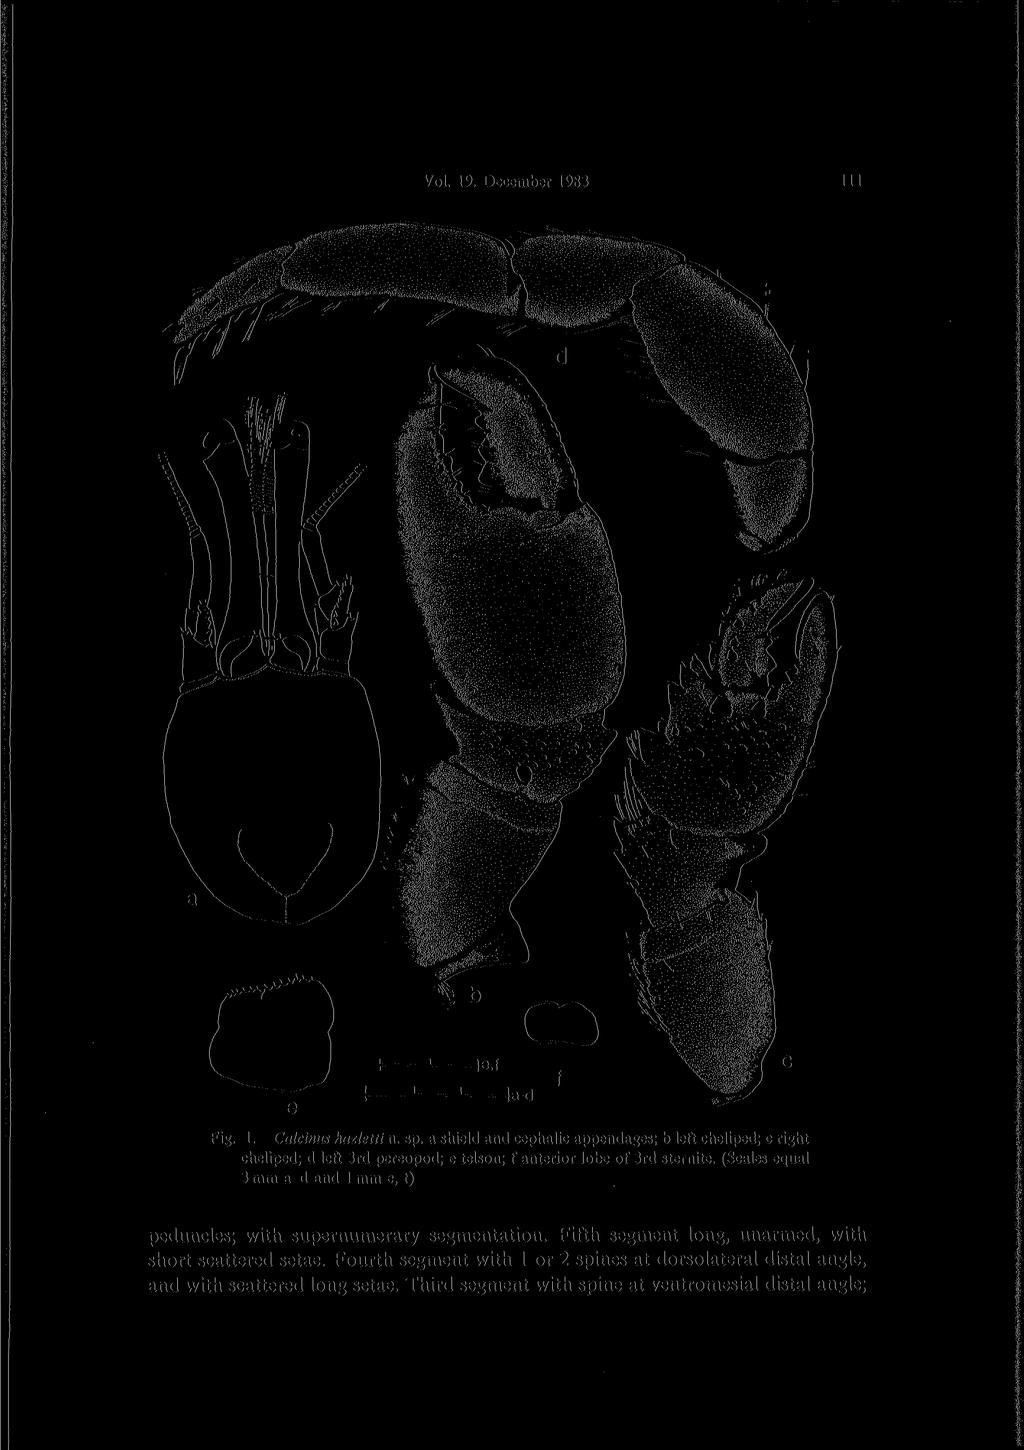 Vol. 19. December 1983 111 Fig. 1. Calcinus hazletti n. sp. a shield and cephalic appendages; b left cheliped; c right cheliped; d left 3rd pereopod; e telson; f anterior lobe of 3rd sternite.